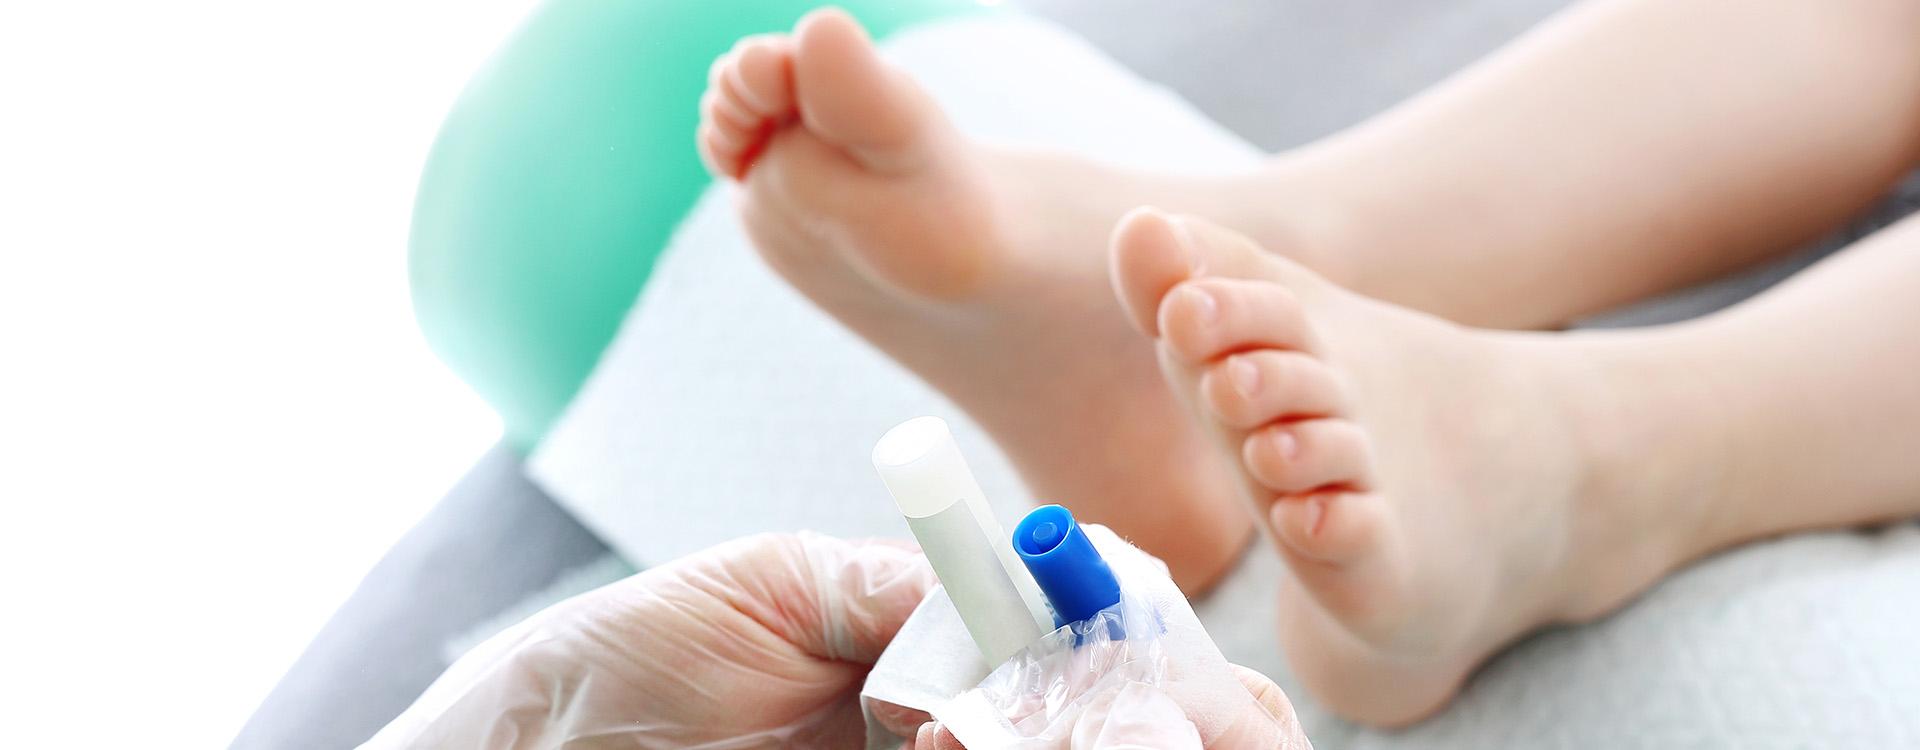 Podiatrist examining child's feet